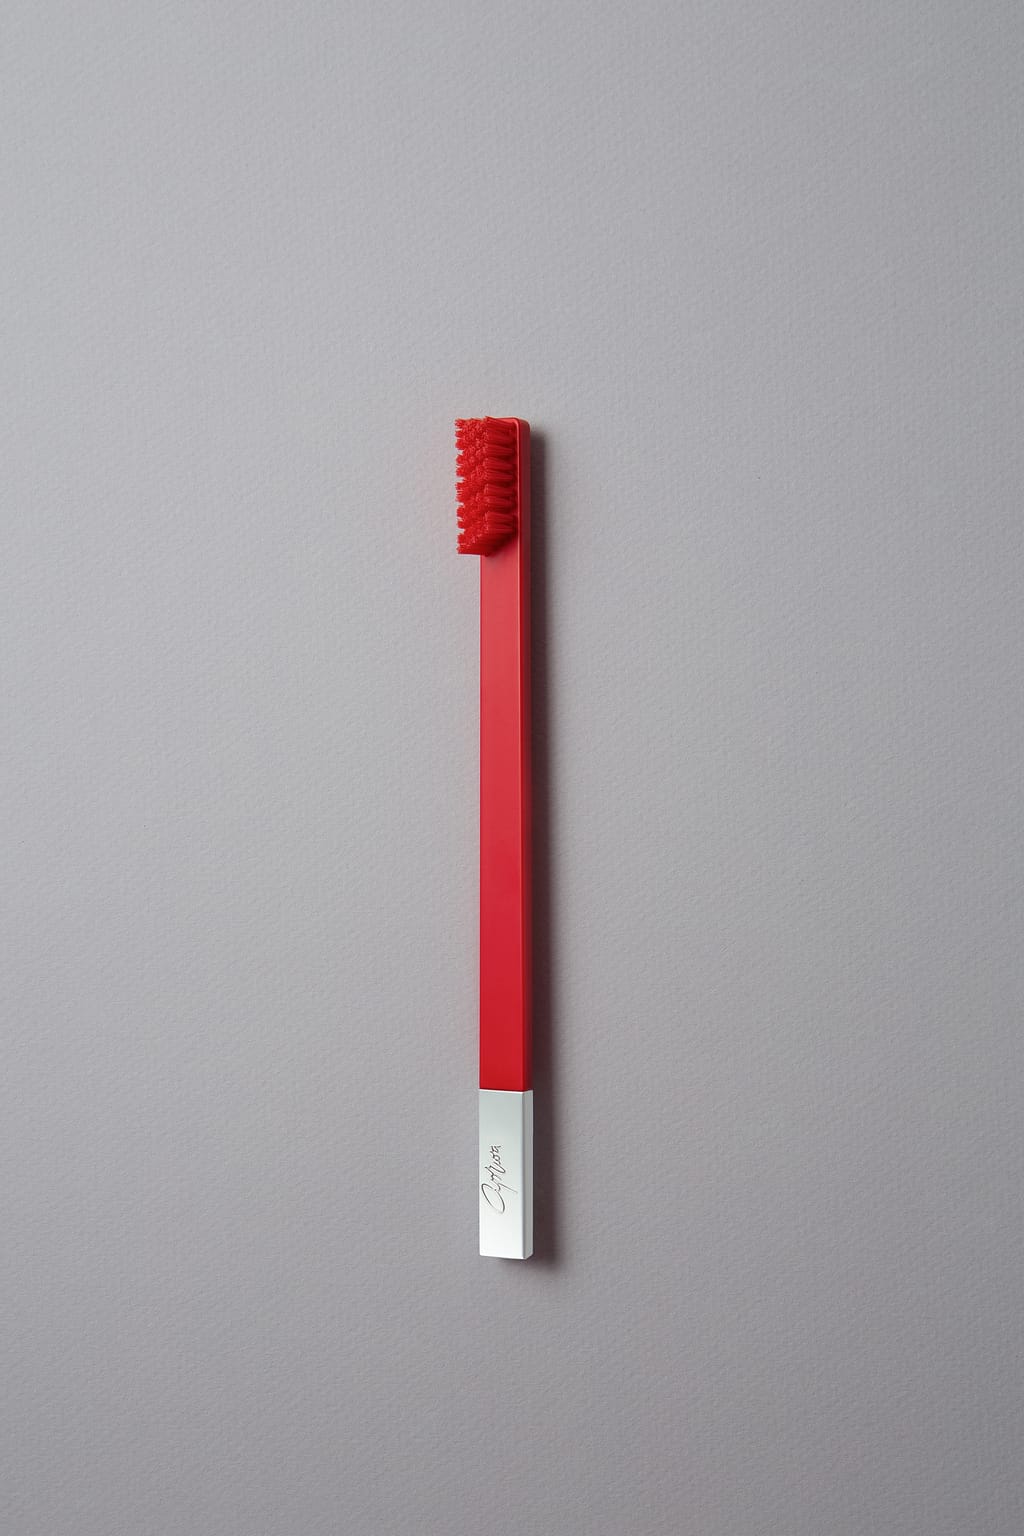 Carmine Red Silver designer toothbrush SLIM by Apriori